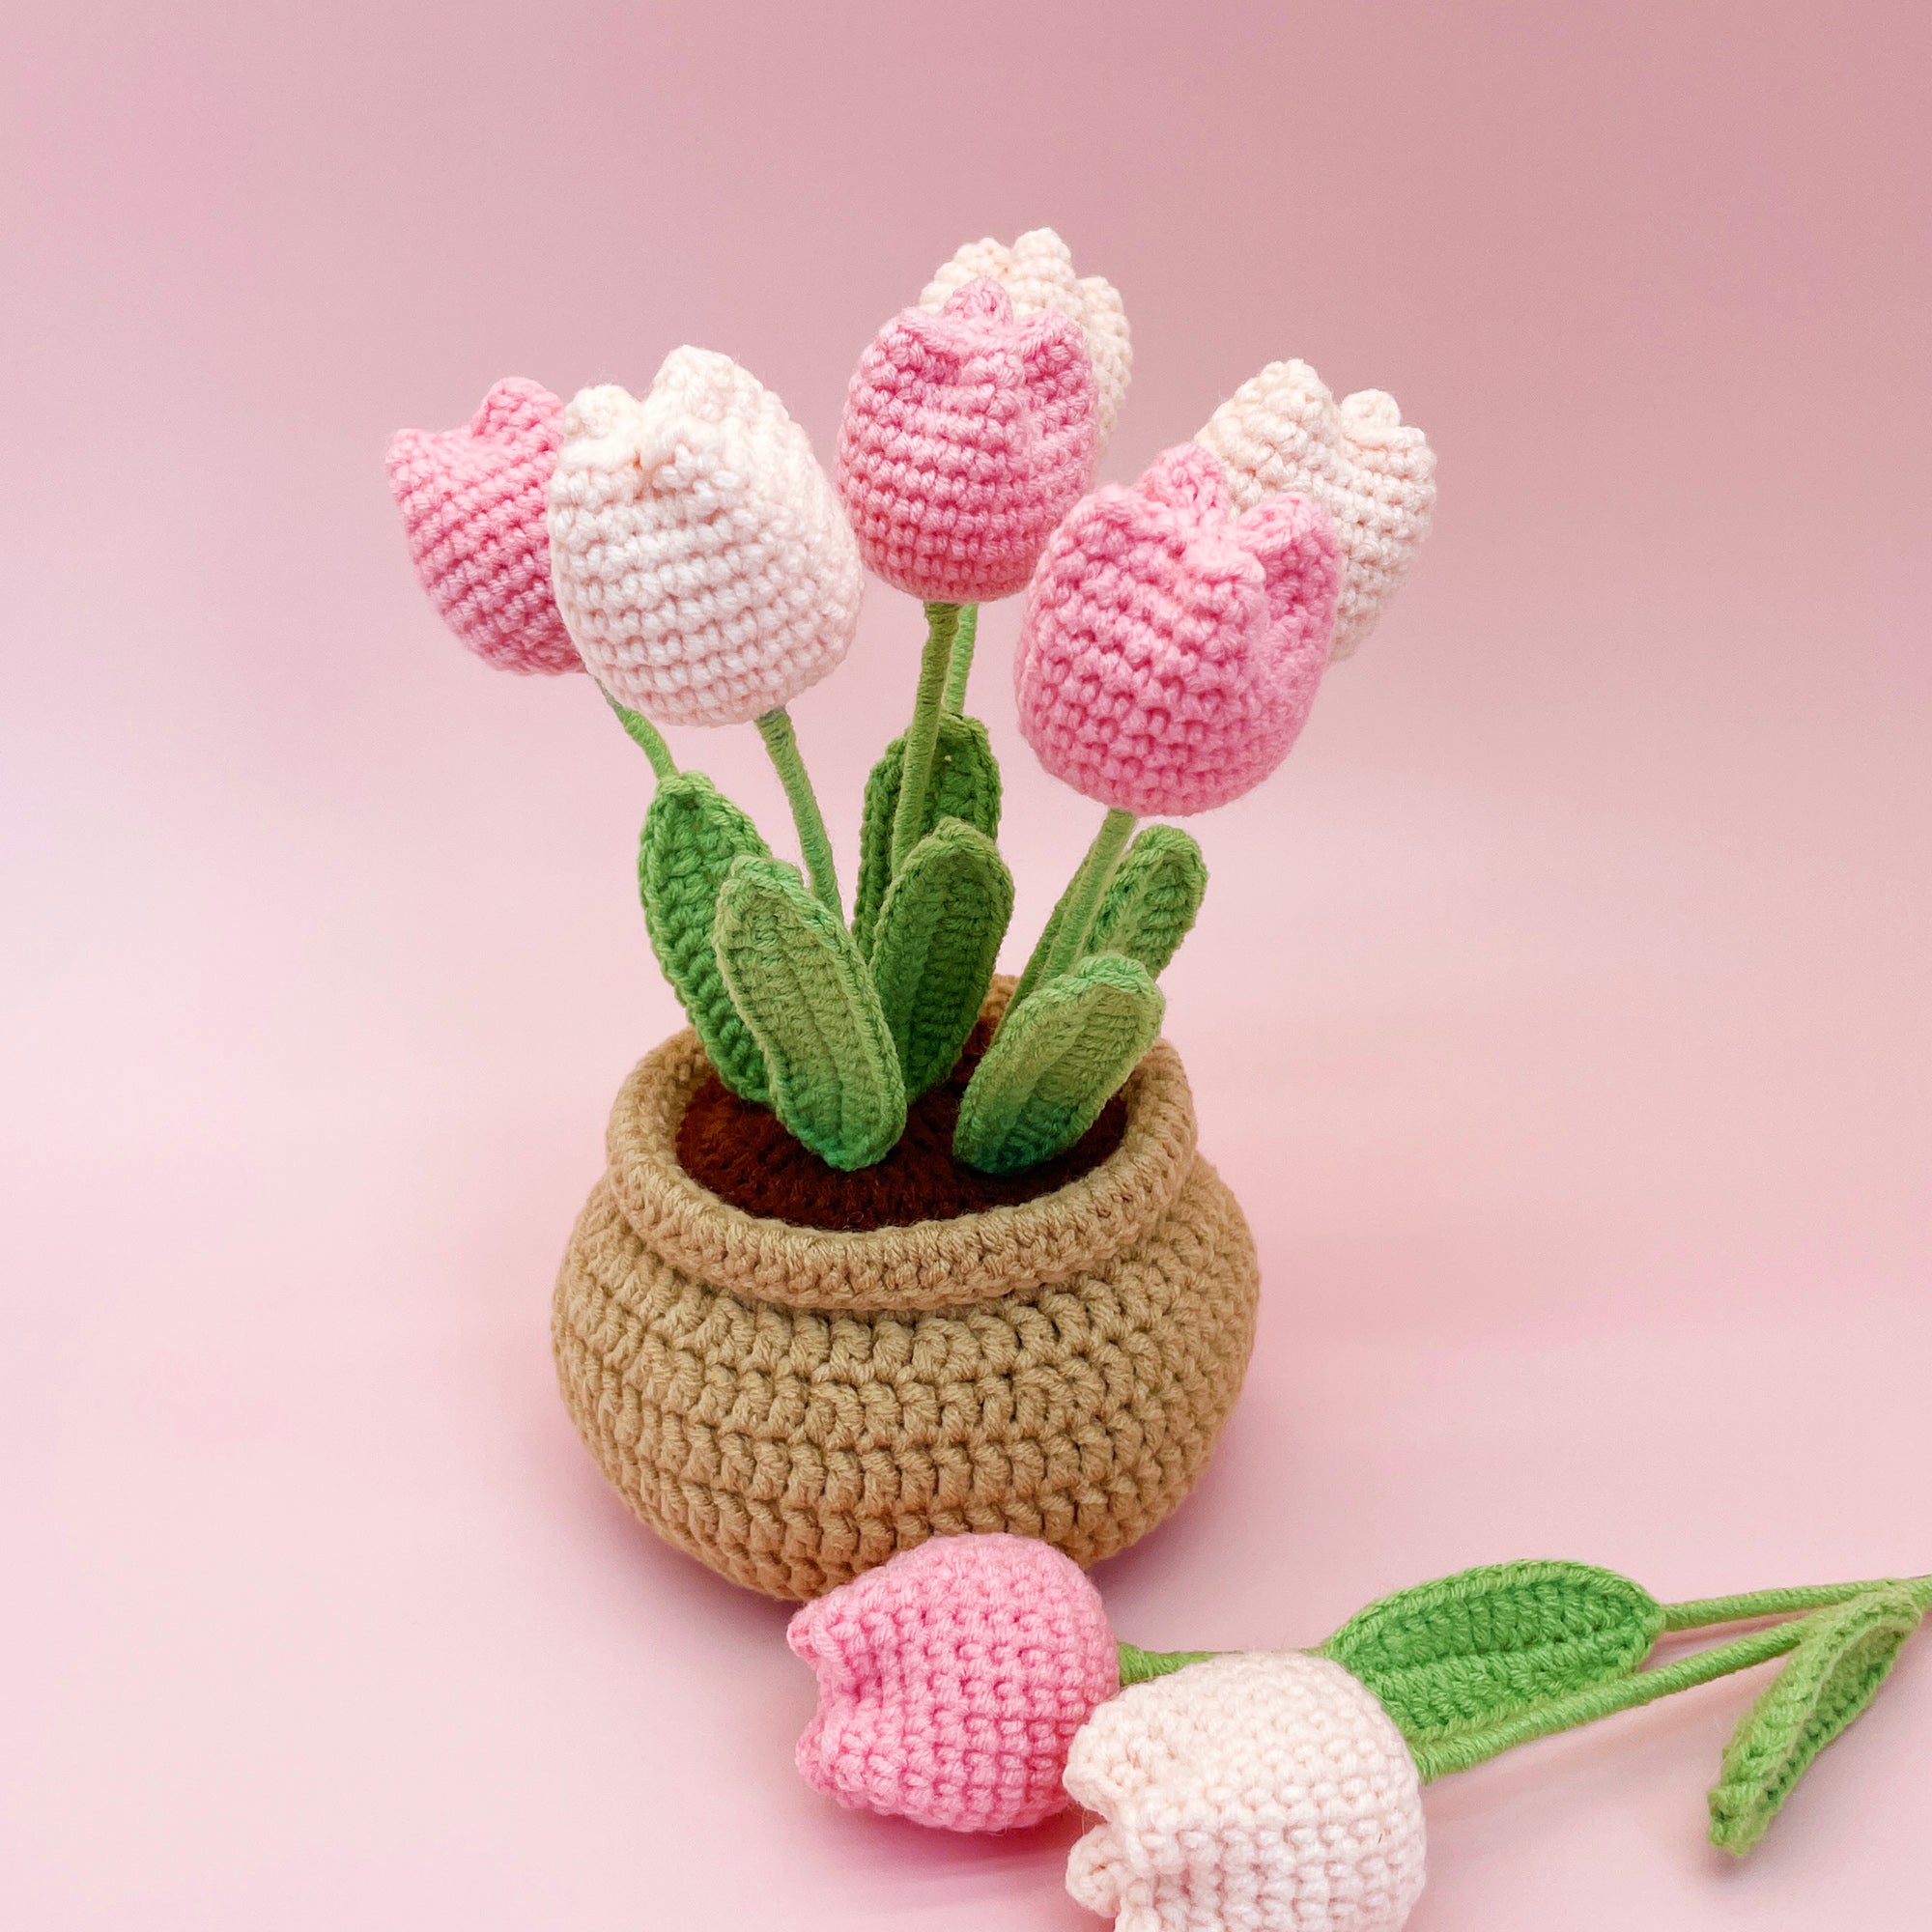 P-CUTE Crochet Crochet Kit Knit Kits Tulip Flowerpot Crochet Starter Kit  Craft Gift Idea Multicolored Yarn Flower Crochet Kit Handmade Crafts Lovers